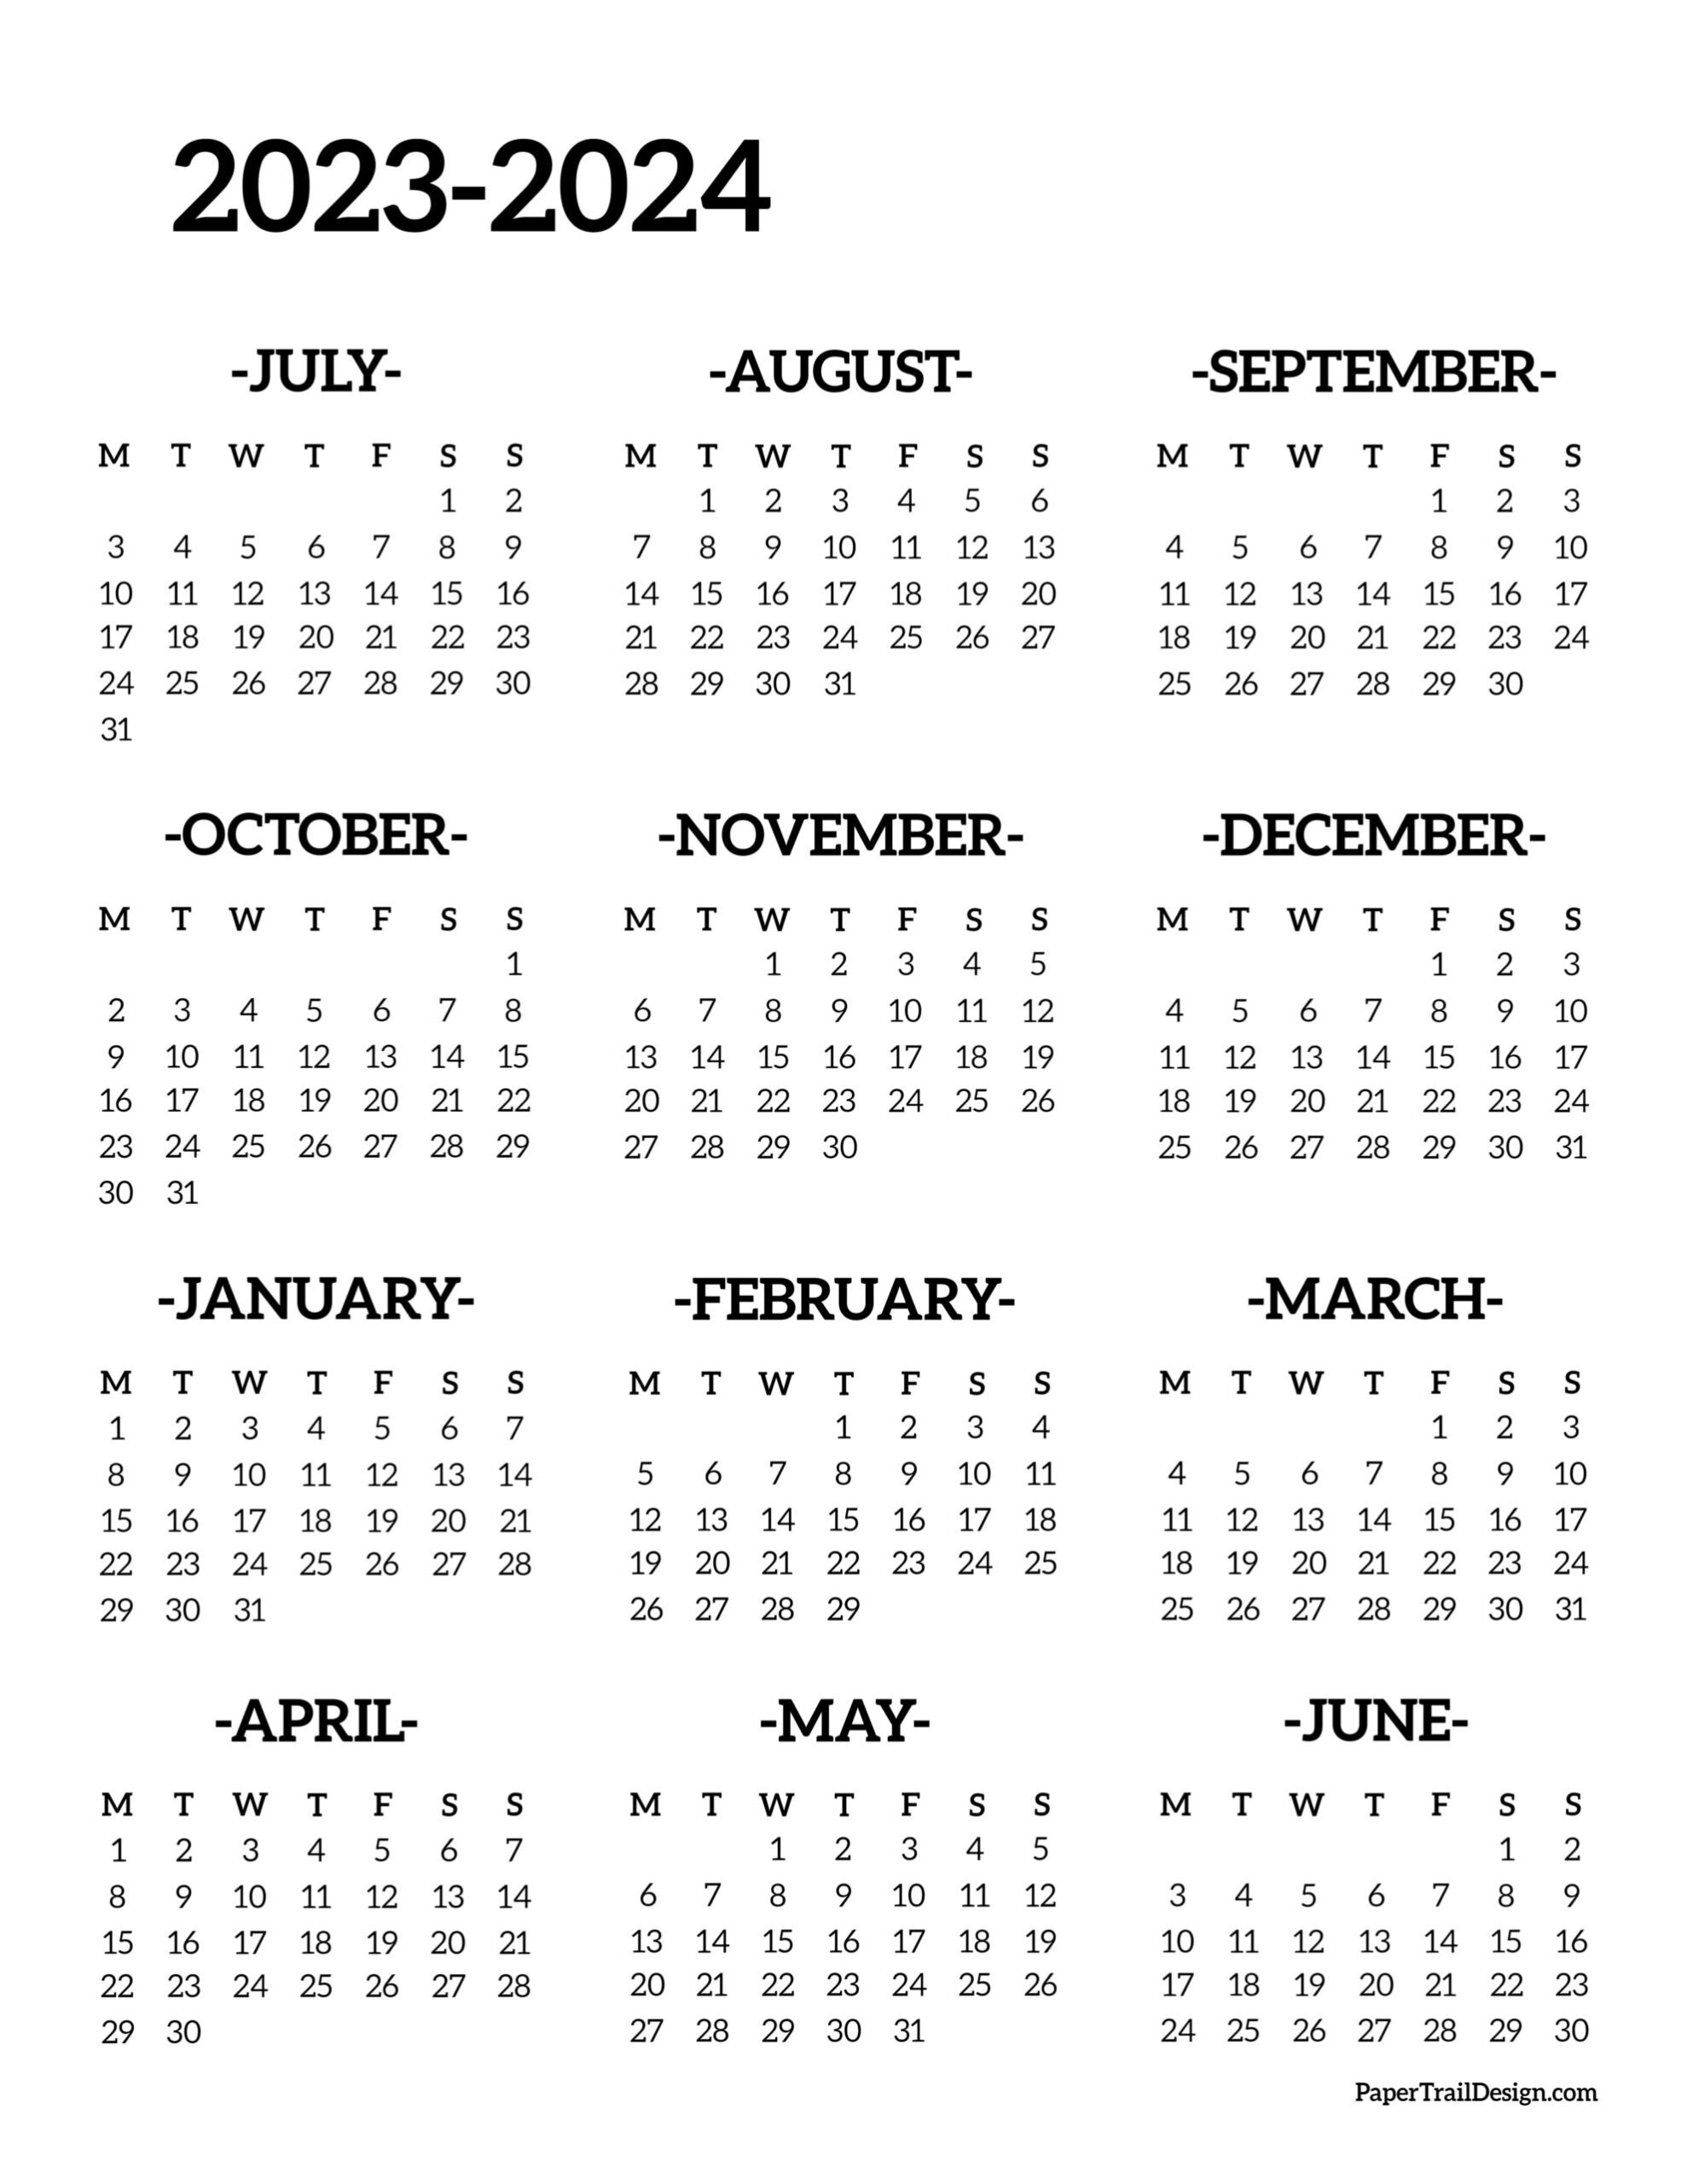 2023-2024 School Year Calendar Free Printable - Paper Trail Design in June 2023 To May 2024 Calendar